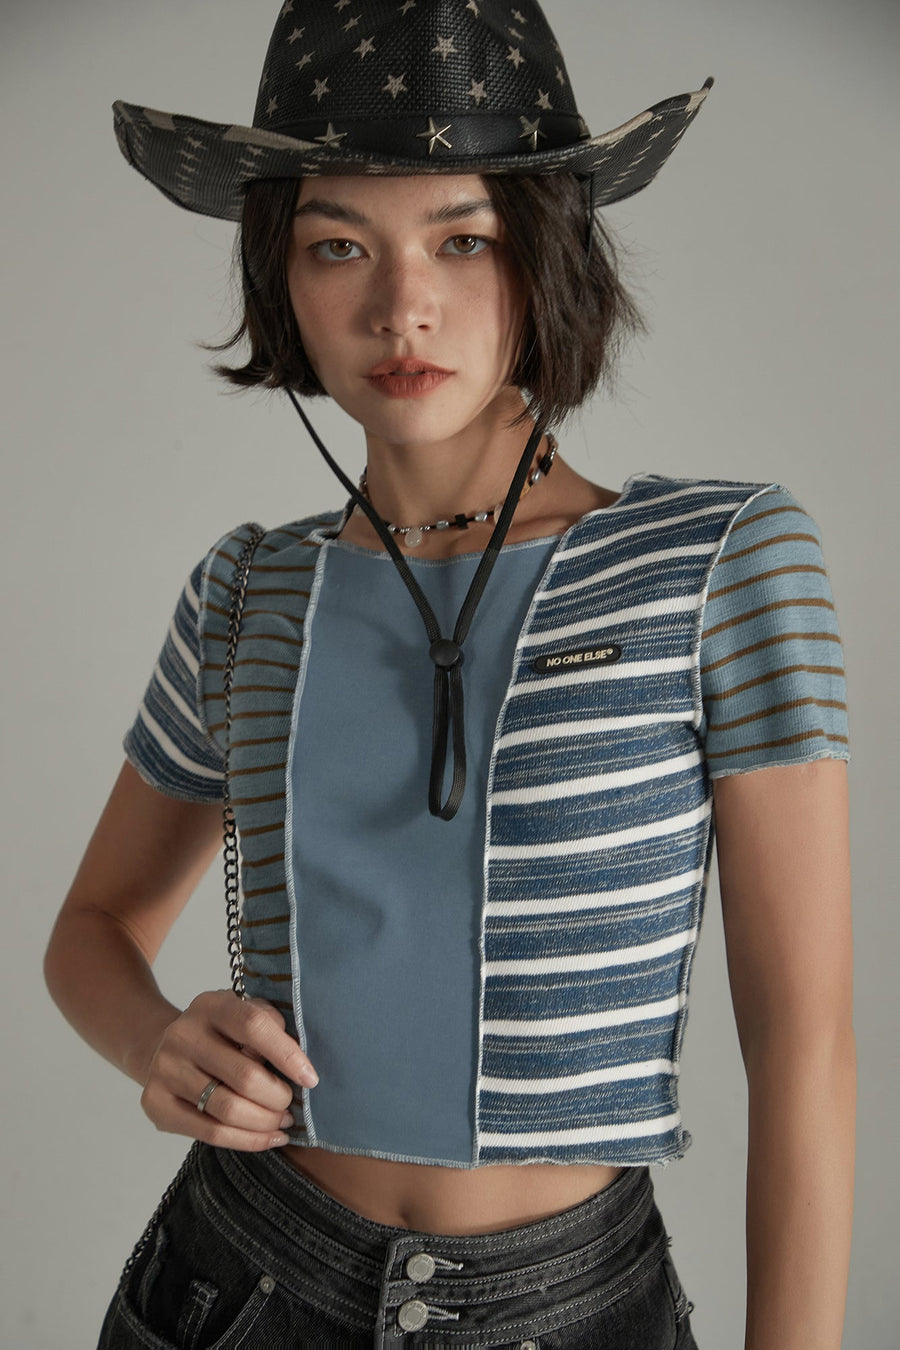 CHUU Contrast Striped Slim Cropped T-Shirt